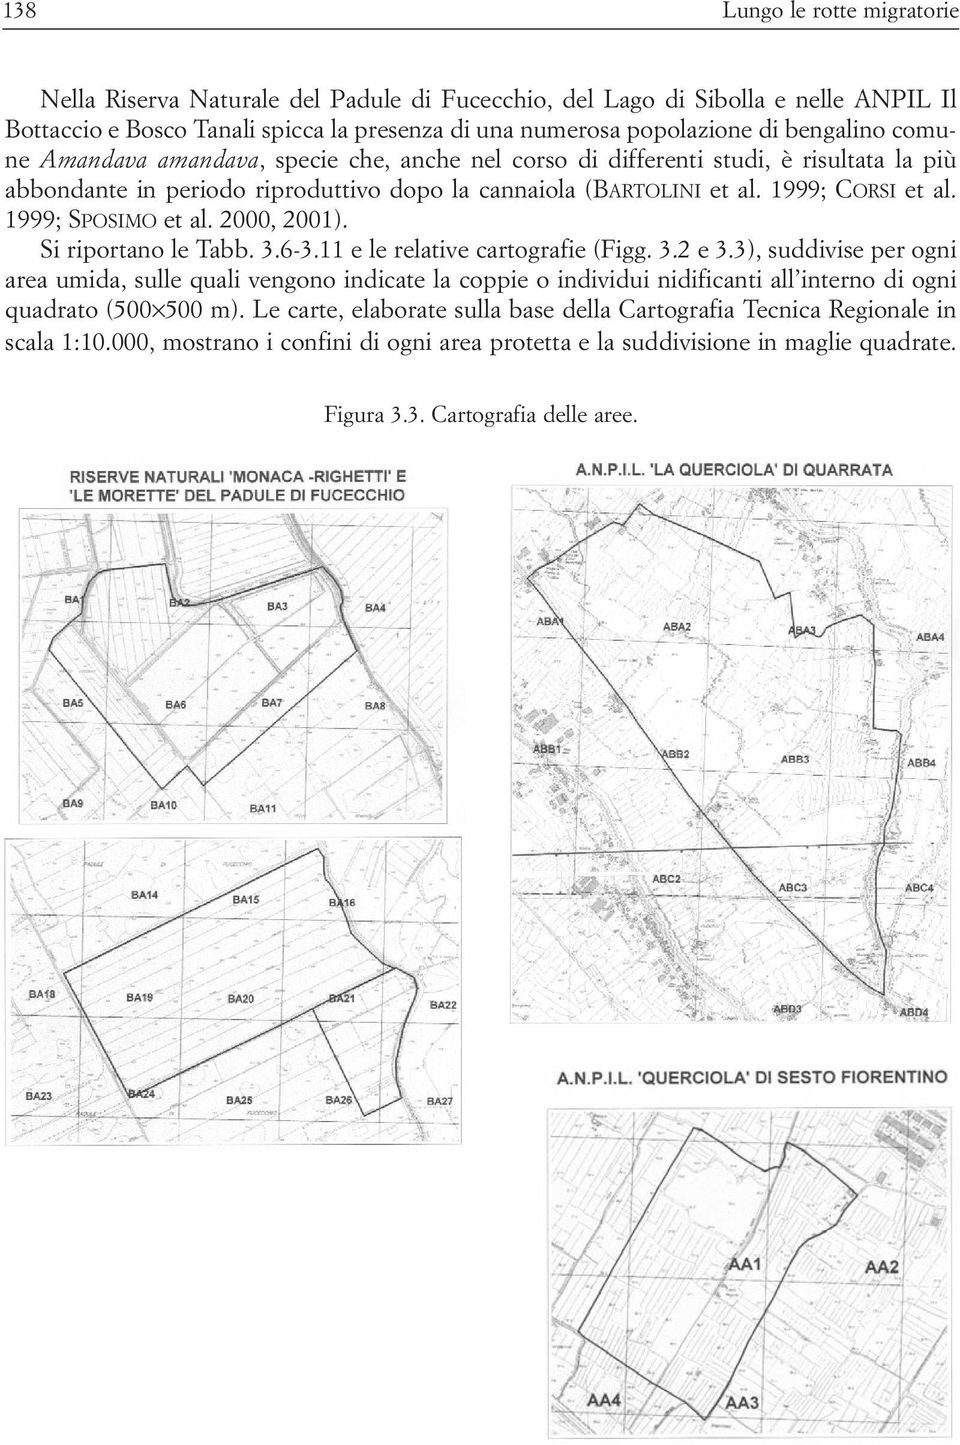 1999; SPOSIMO et al. 2000, 2001). Si riportano le Tabb. 3.6-3.11 e le relative cartografie (Figg. 3.2 e 3.